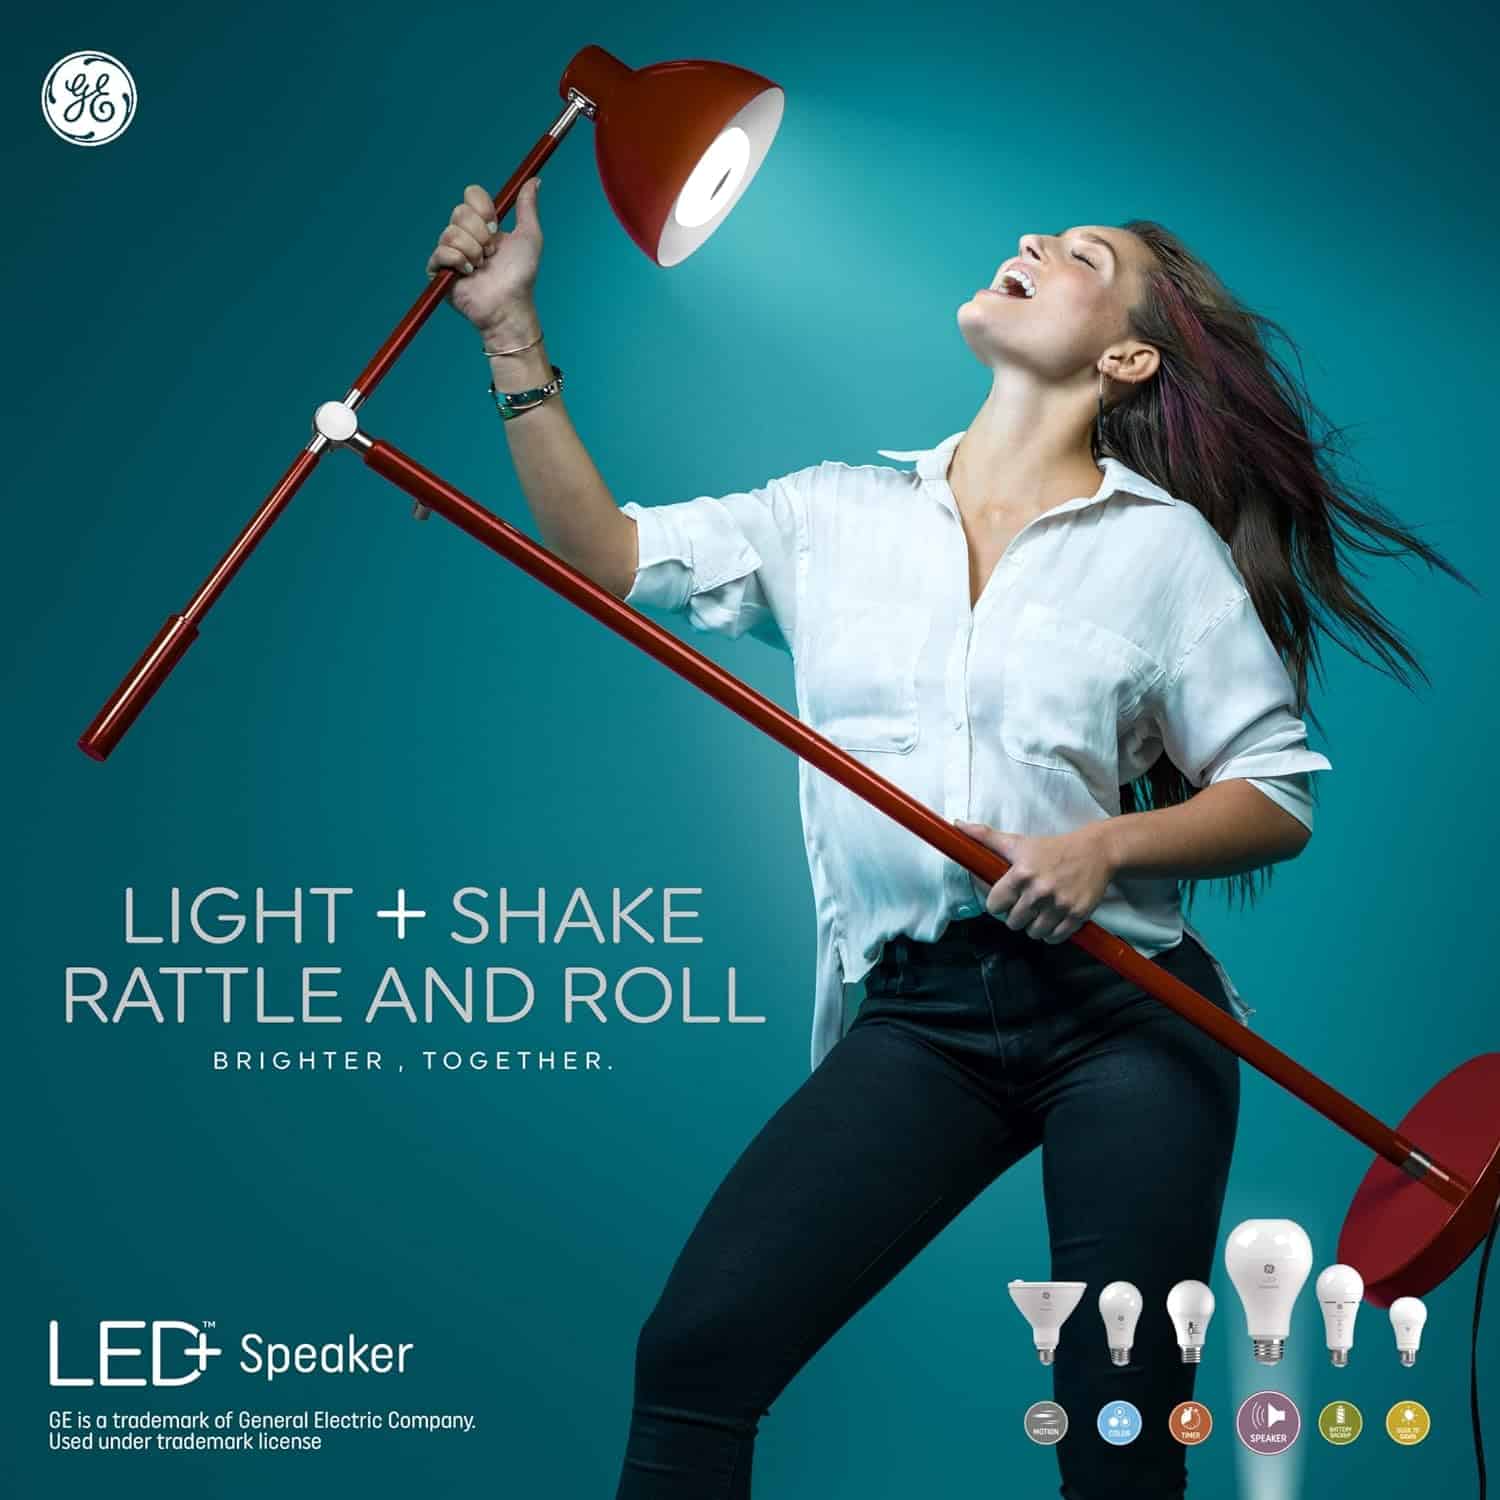 GE LED+ Color Changing Speaker LED Light Bulb with Remote, 14W, Multicolor + Warm White, PAR38 Outdoor Floodlight (1 Pack)